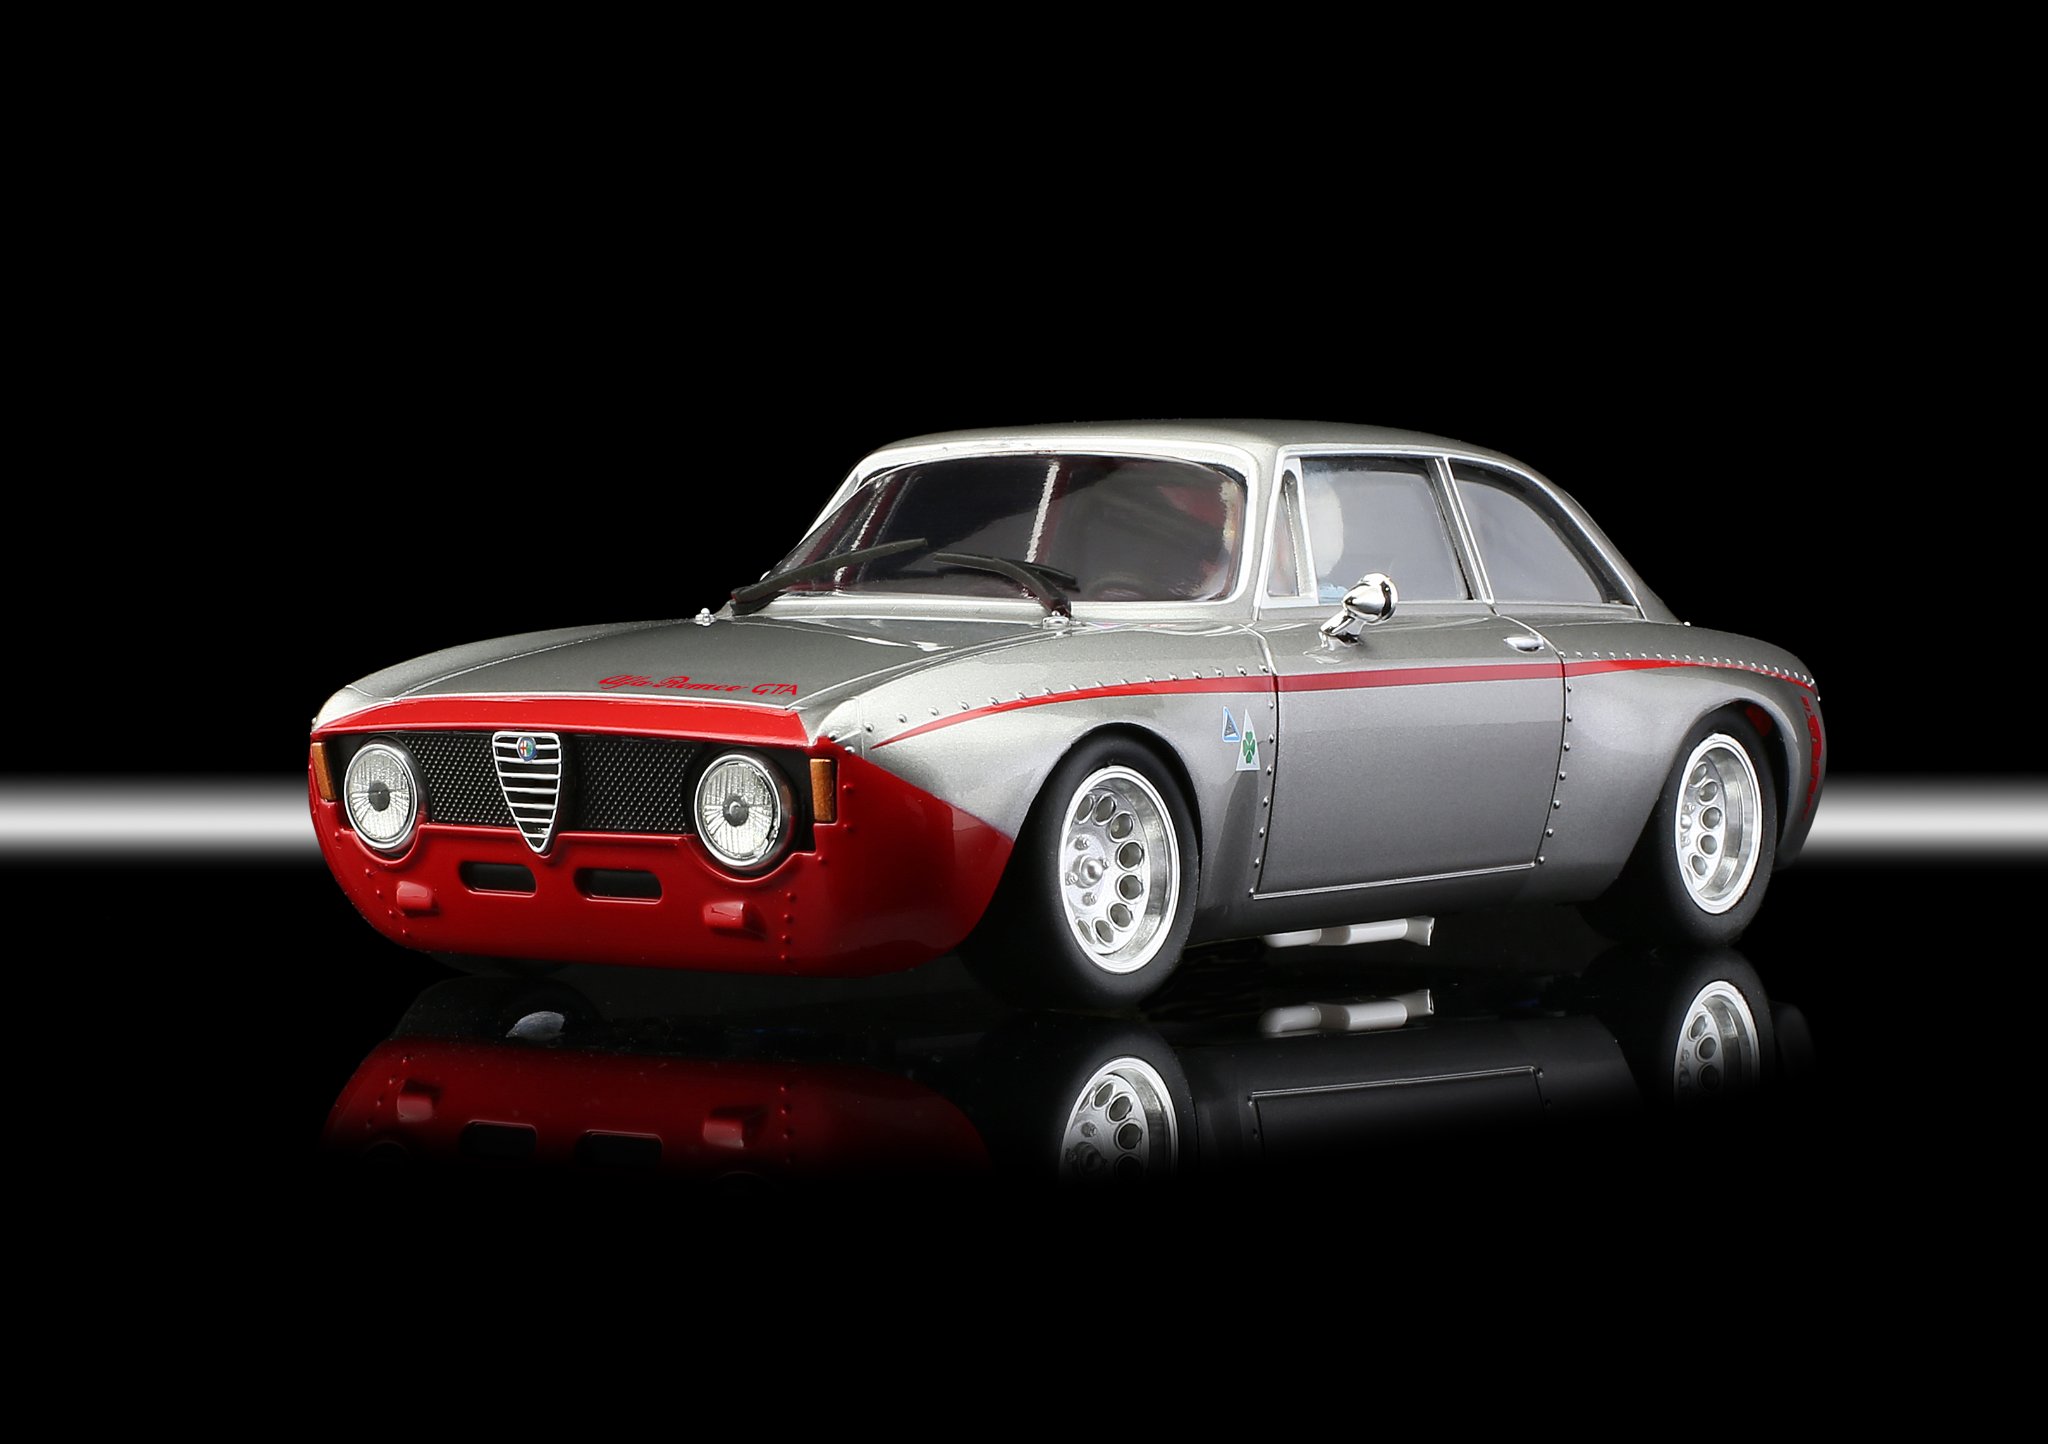 BRM142S Alfa GTA Silver and Red Club Car